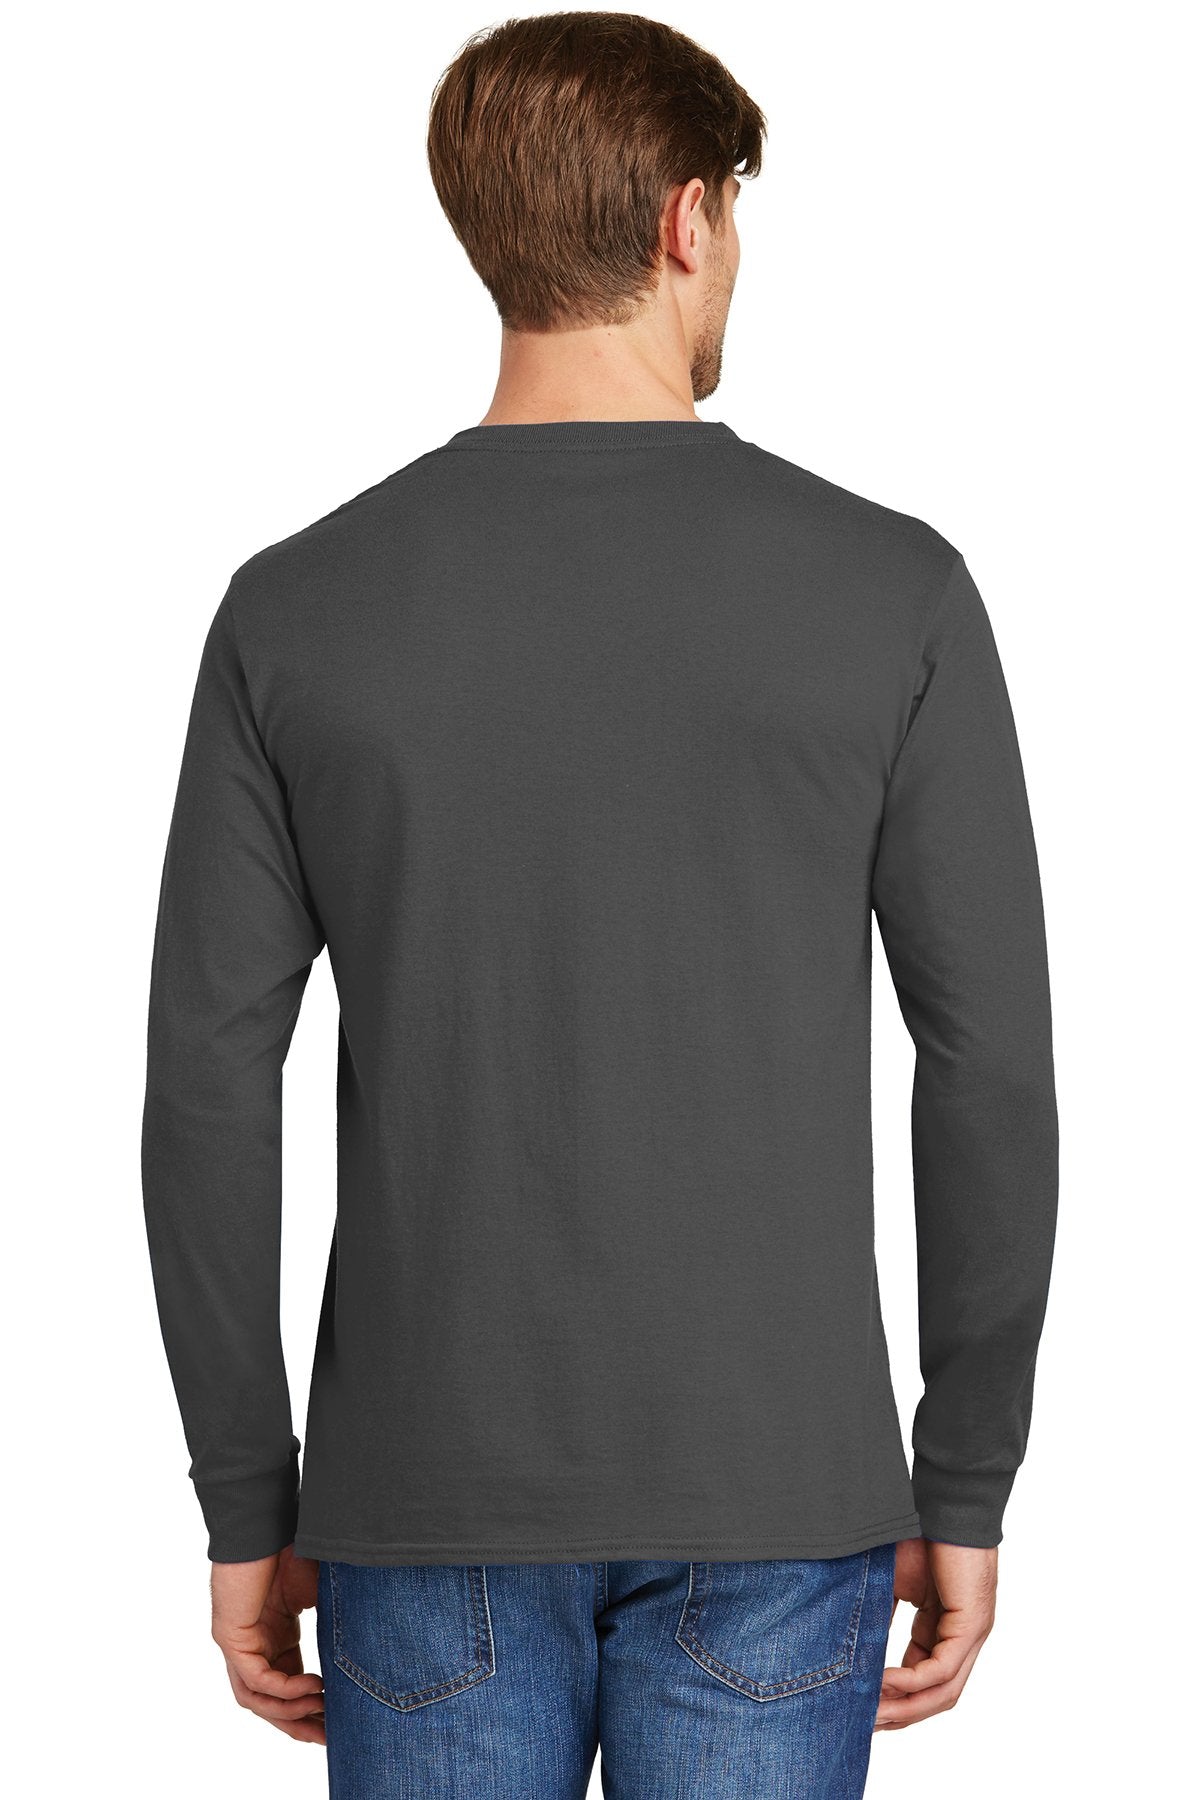 hanes tagless cotton long sleeve t shirt 5586 smoke grey